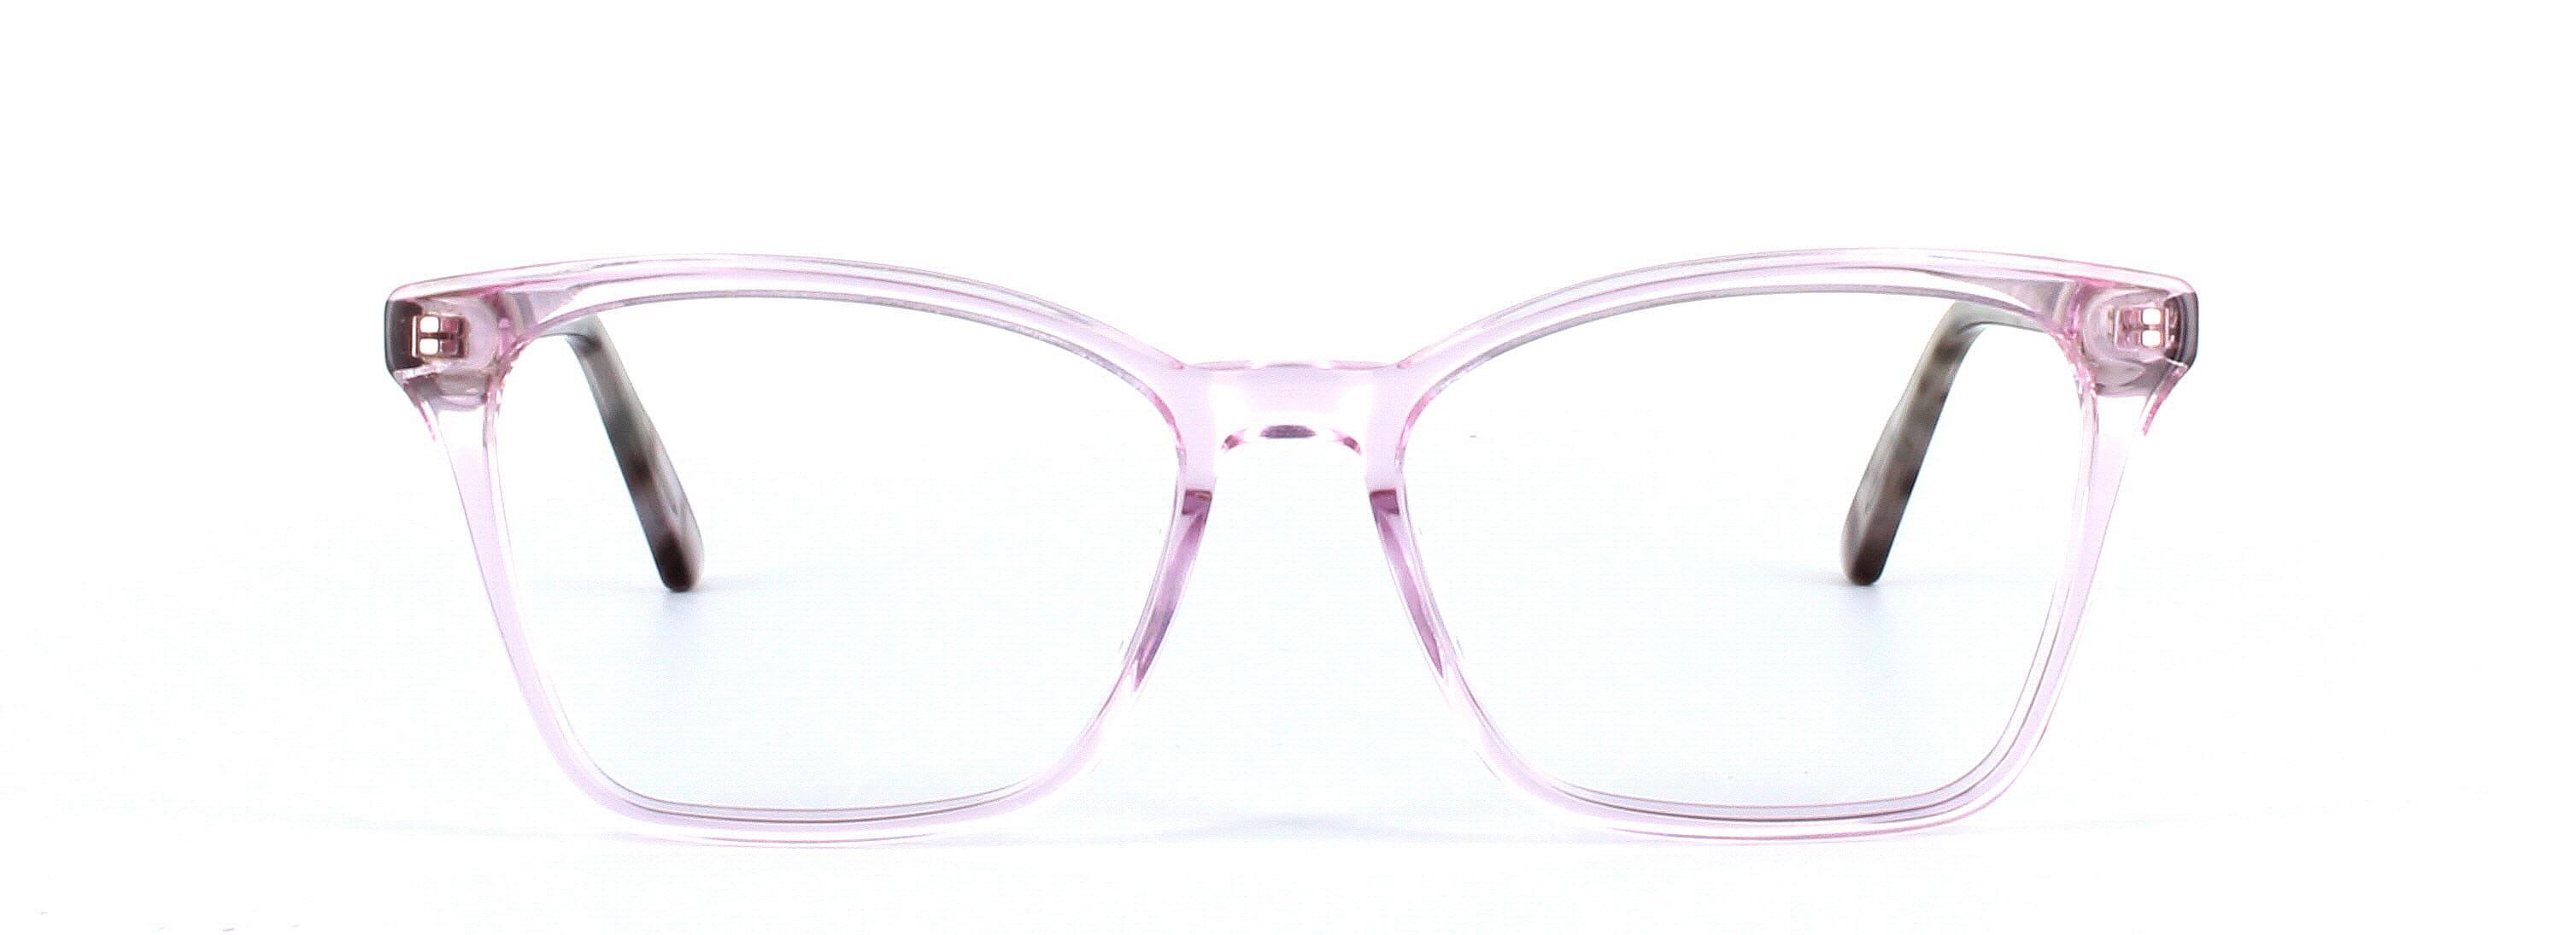 Caelan Pink Full Rim Square Plastic Glasses - Image View 5